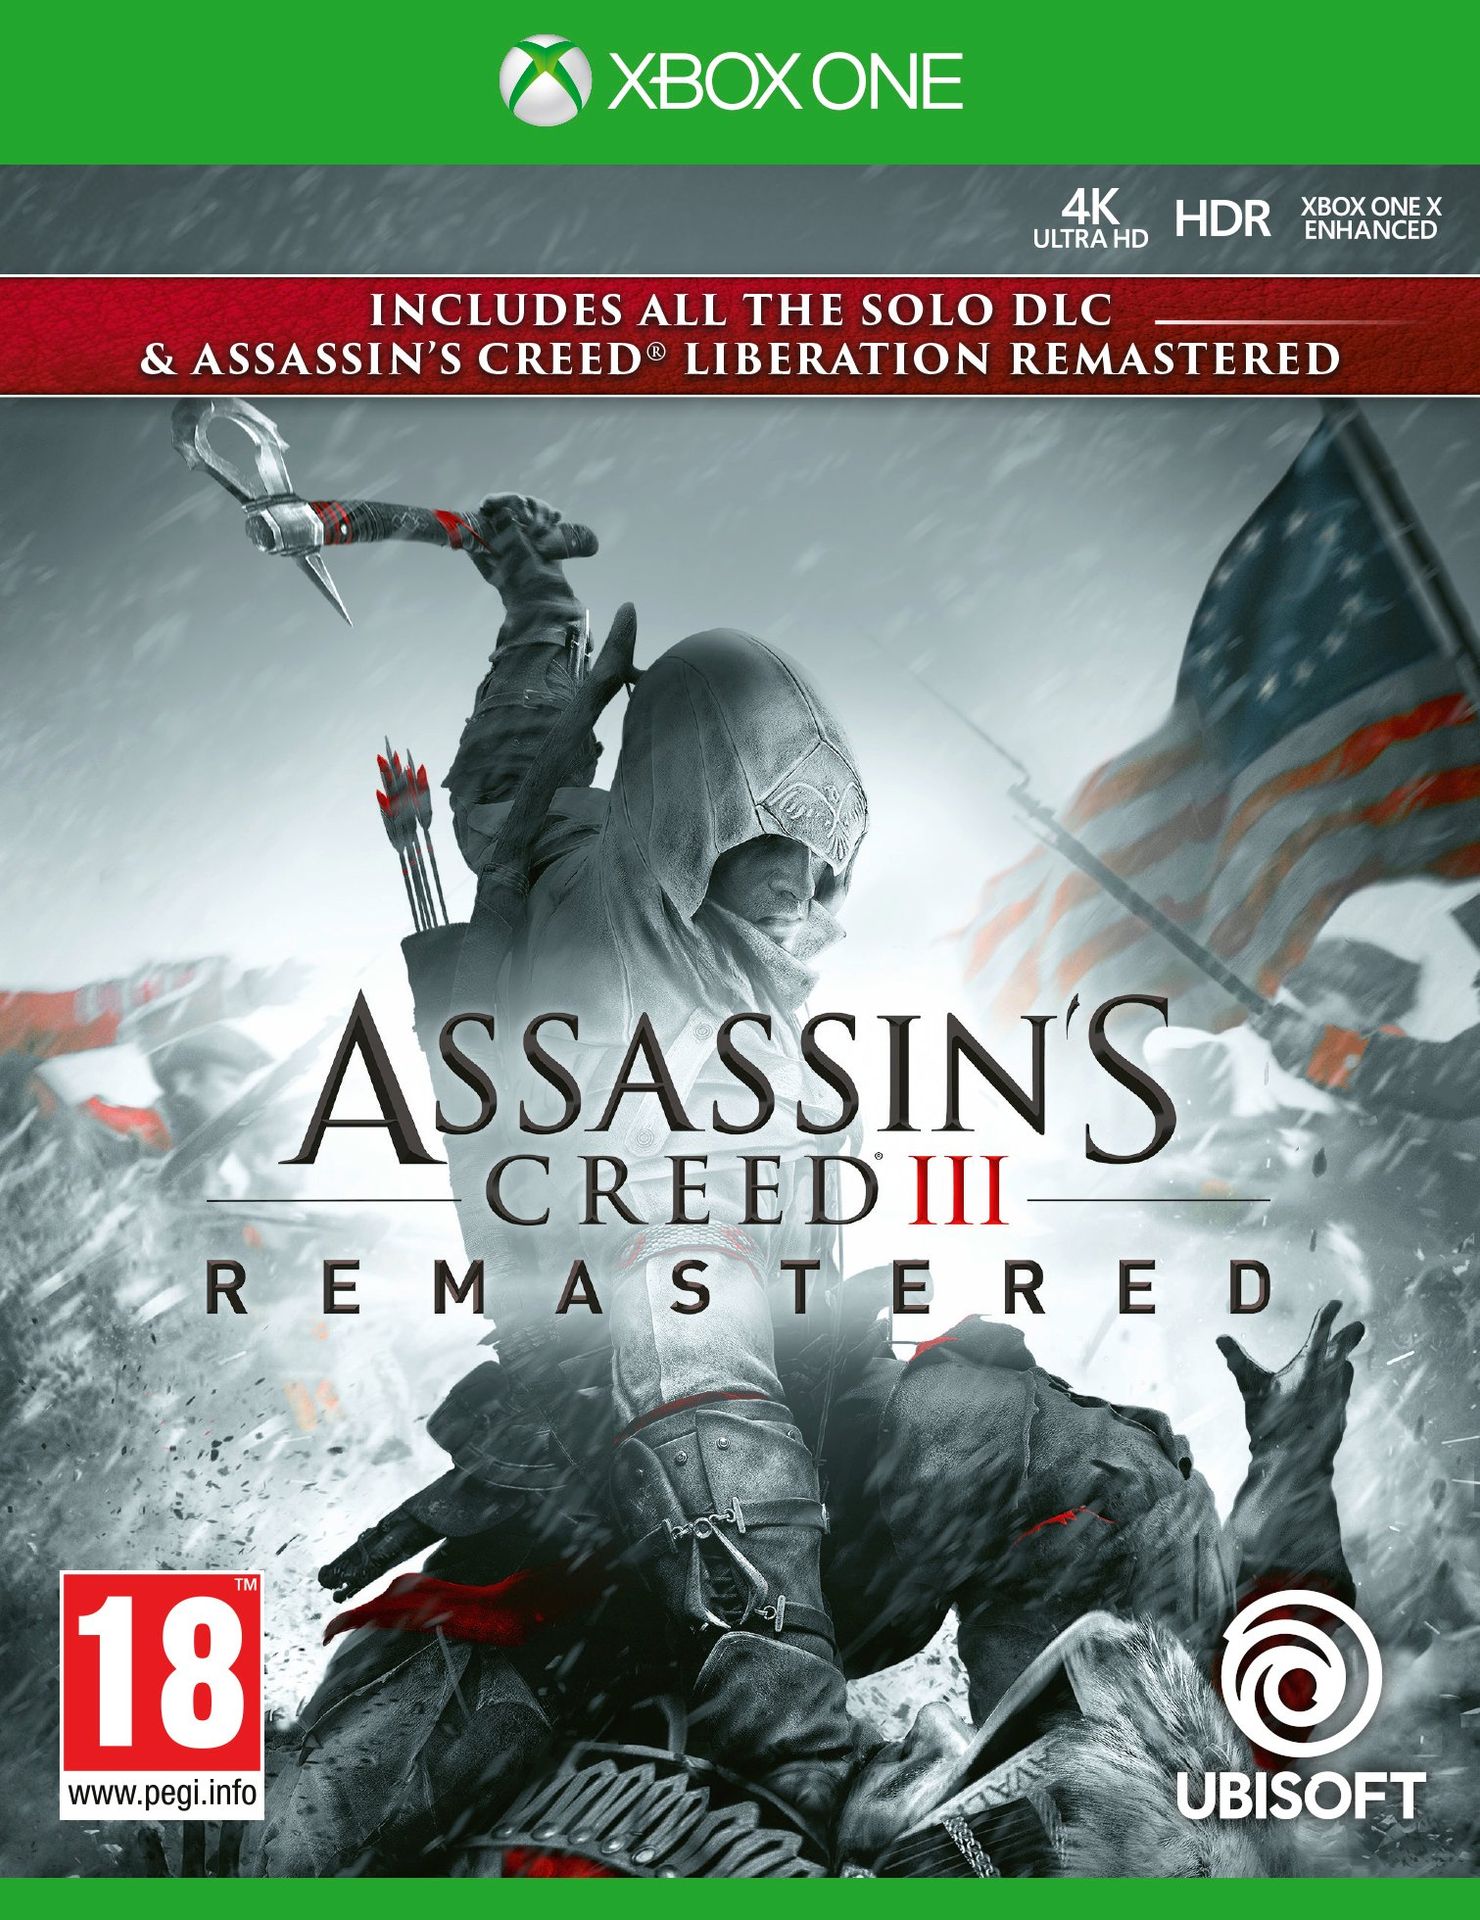 Assassin's Creed III (3) + Liberation HD Remastered PL/ENG (XONE) // WYSYŁKA 24h // DOSTAWA TAKŻE W WEEKEND! // TEL. 48 660 20 30